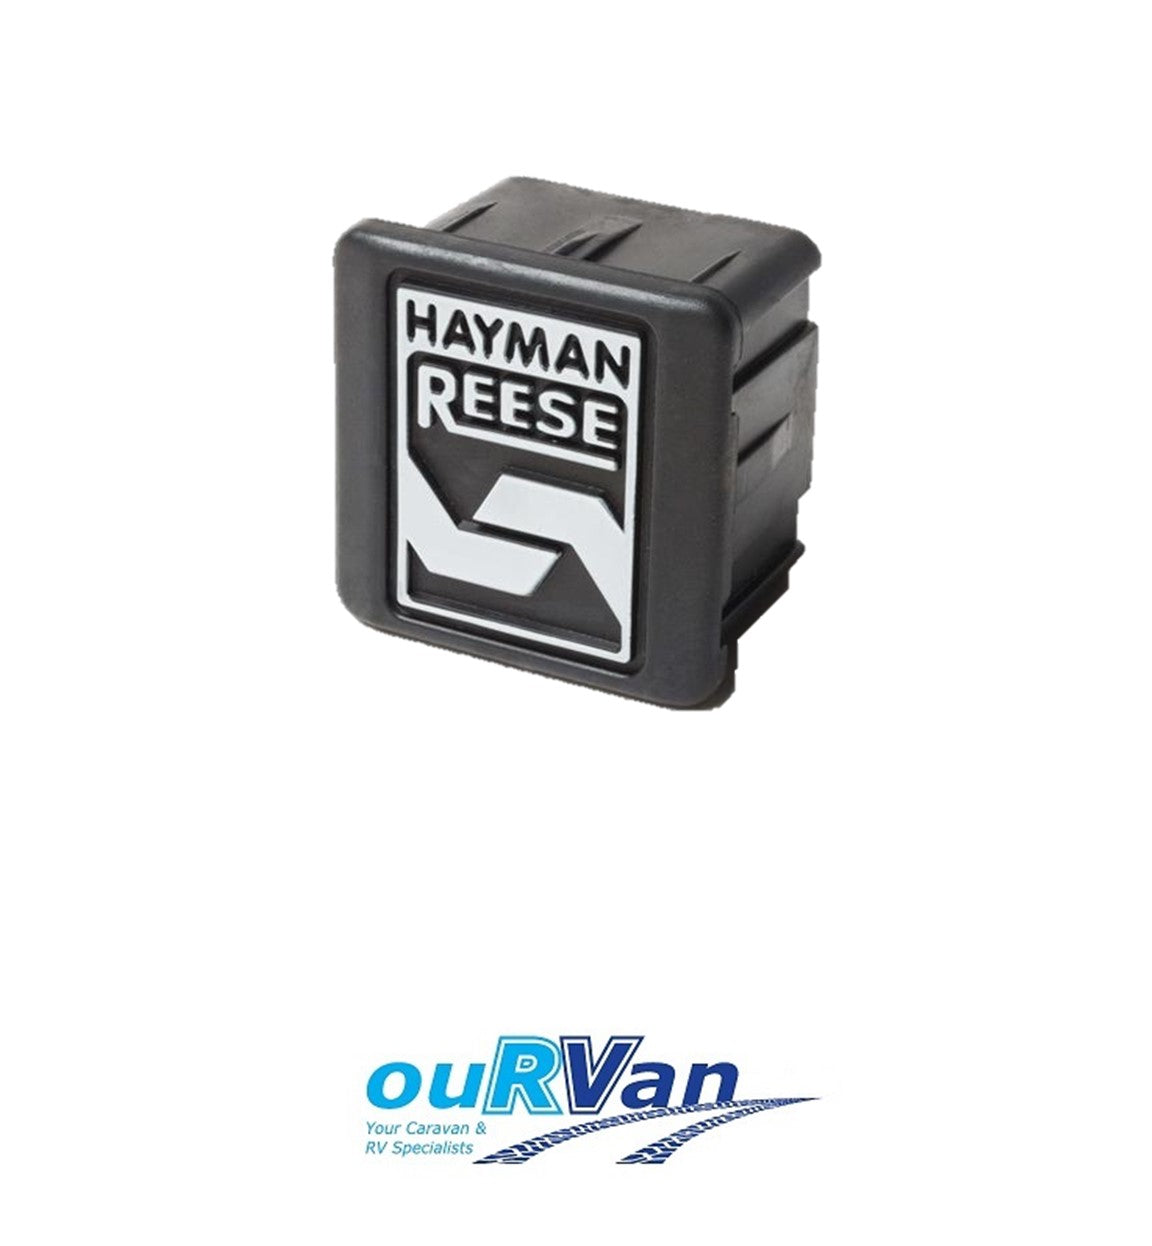 Hayman Reese 50X50 Tow Bar Hitch Receiver Insert Blank Plug Rubber Insert